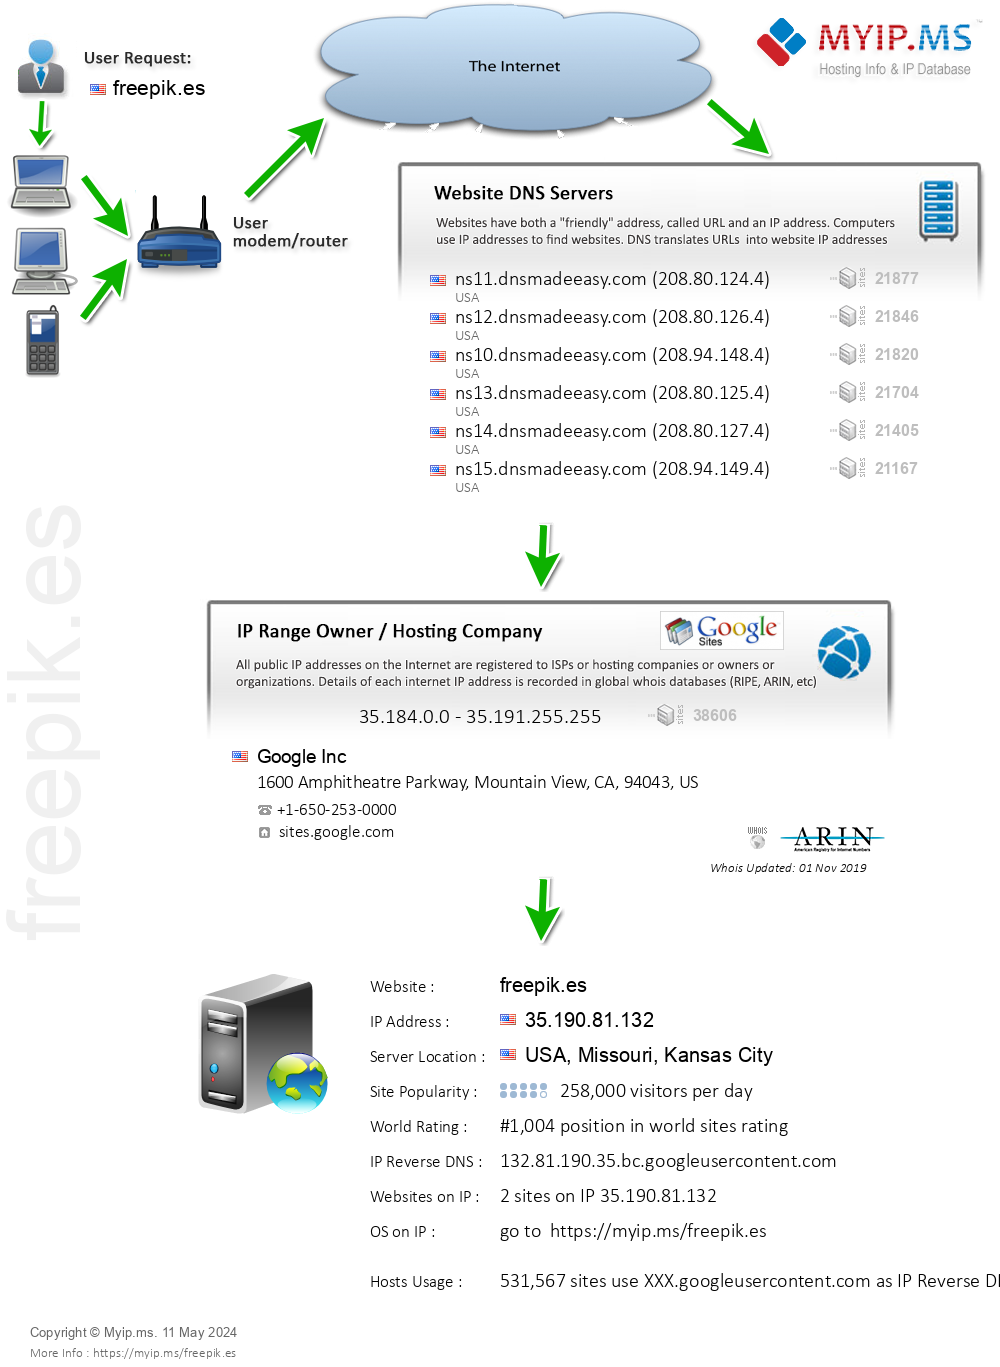 Freepik.es - Website Hosting Visual IP Diagram